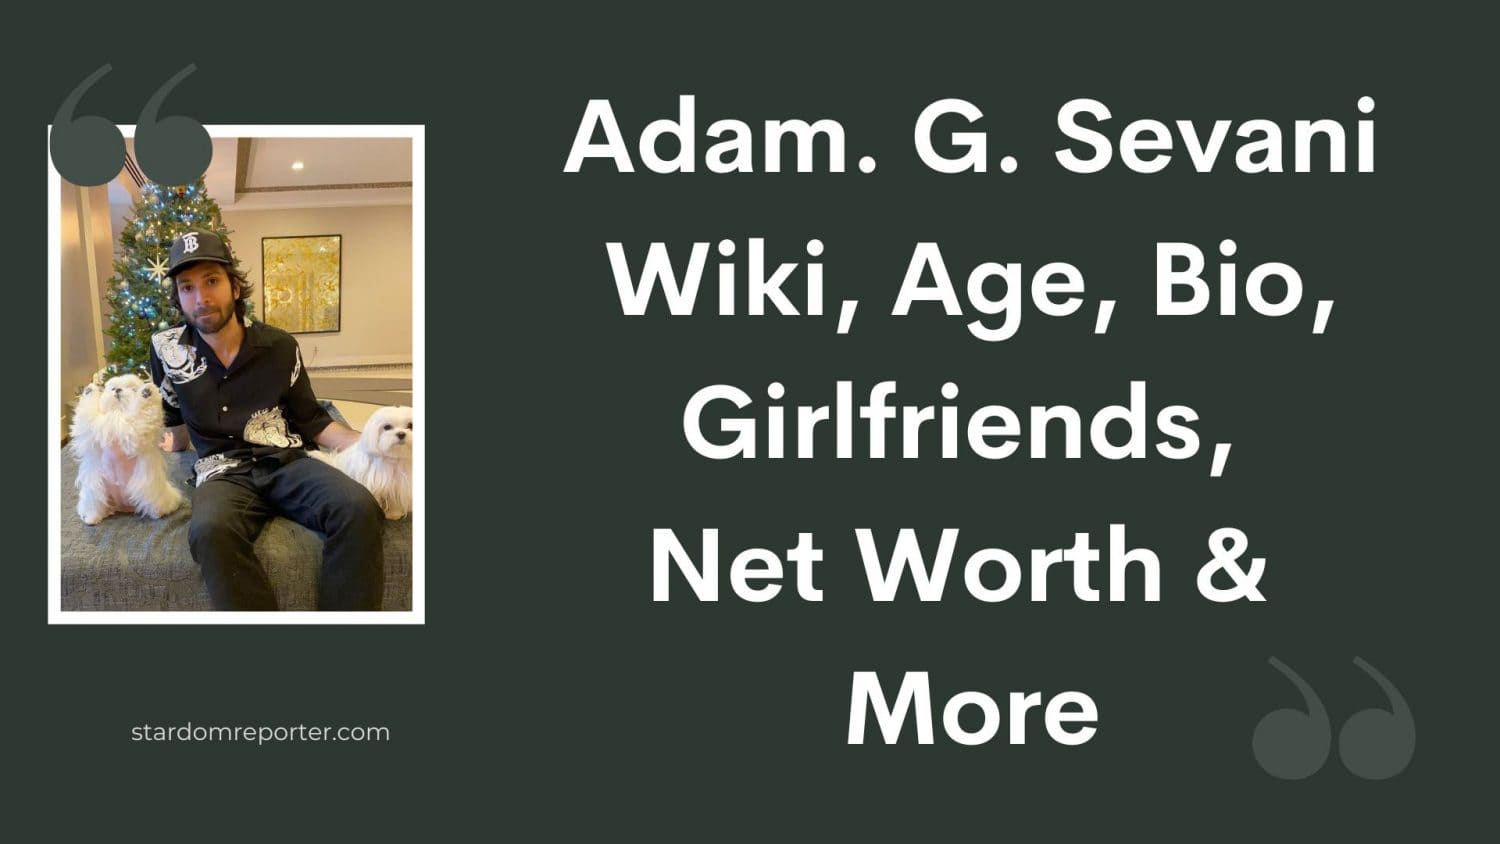 Adam. G. Sevani Wiki, Age, Bio, Girlfriends, Net Worth & More - 1